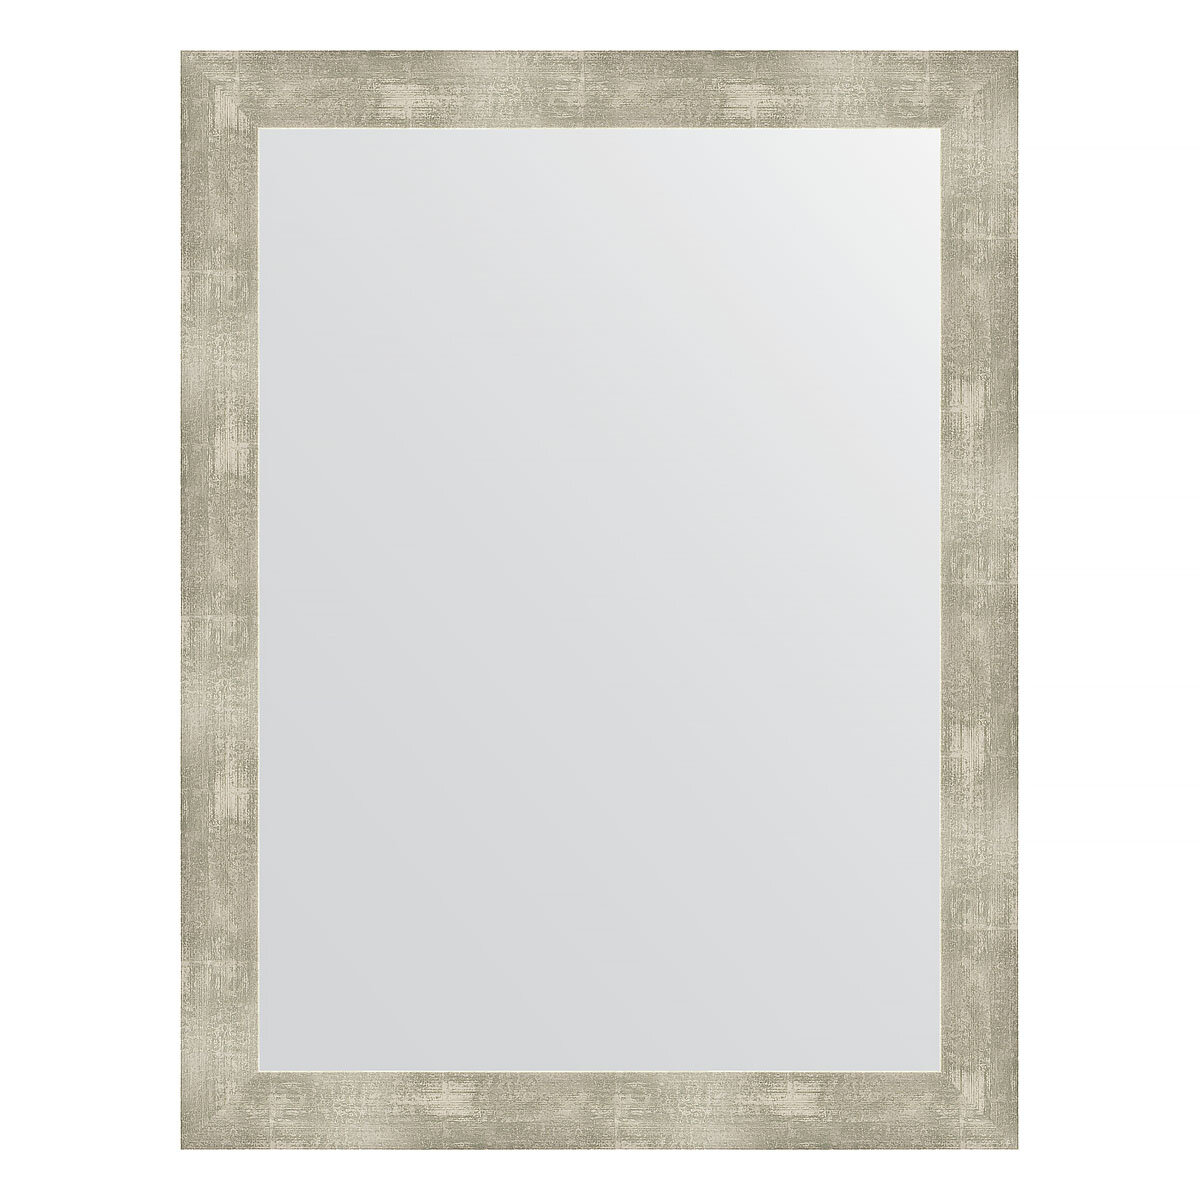 Зеркало Evoform в багетной раме алюминий 61 мм, 64x84 см - фото №1